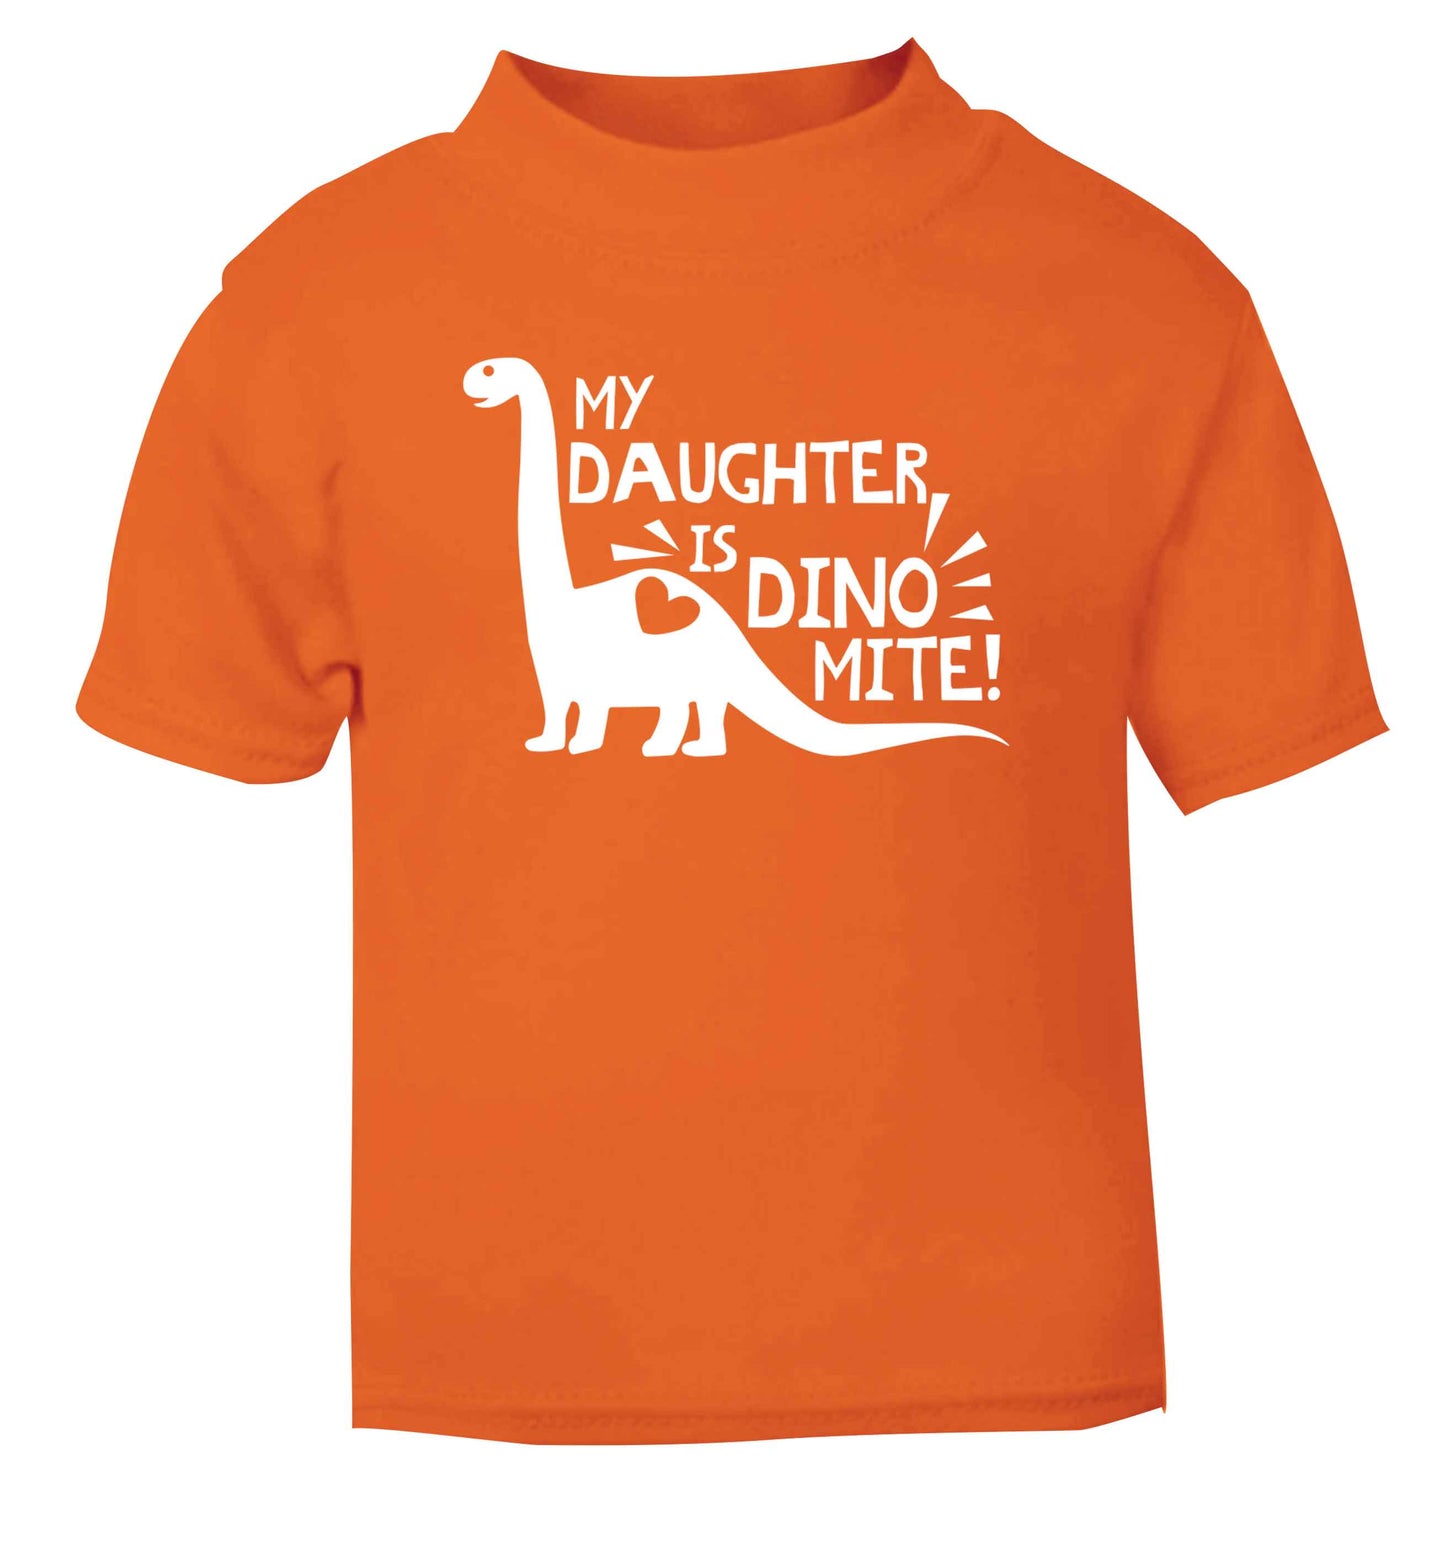 My daughter is dinomite! orange Baby Toddler Tshirt 2 Years